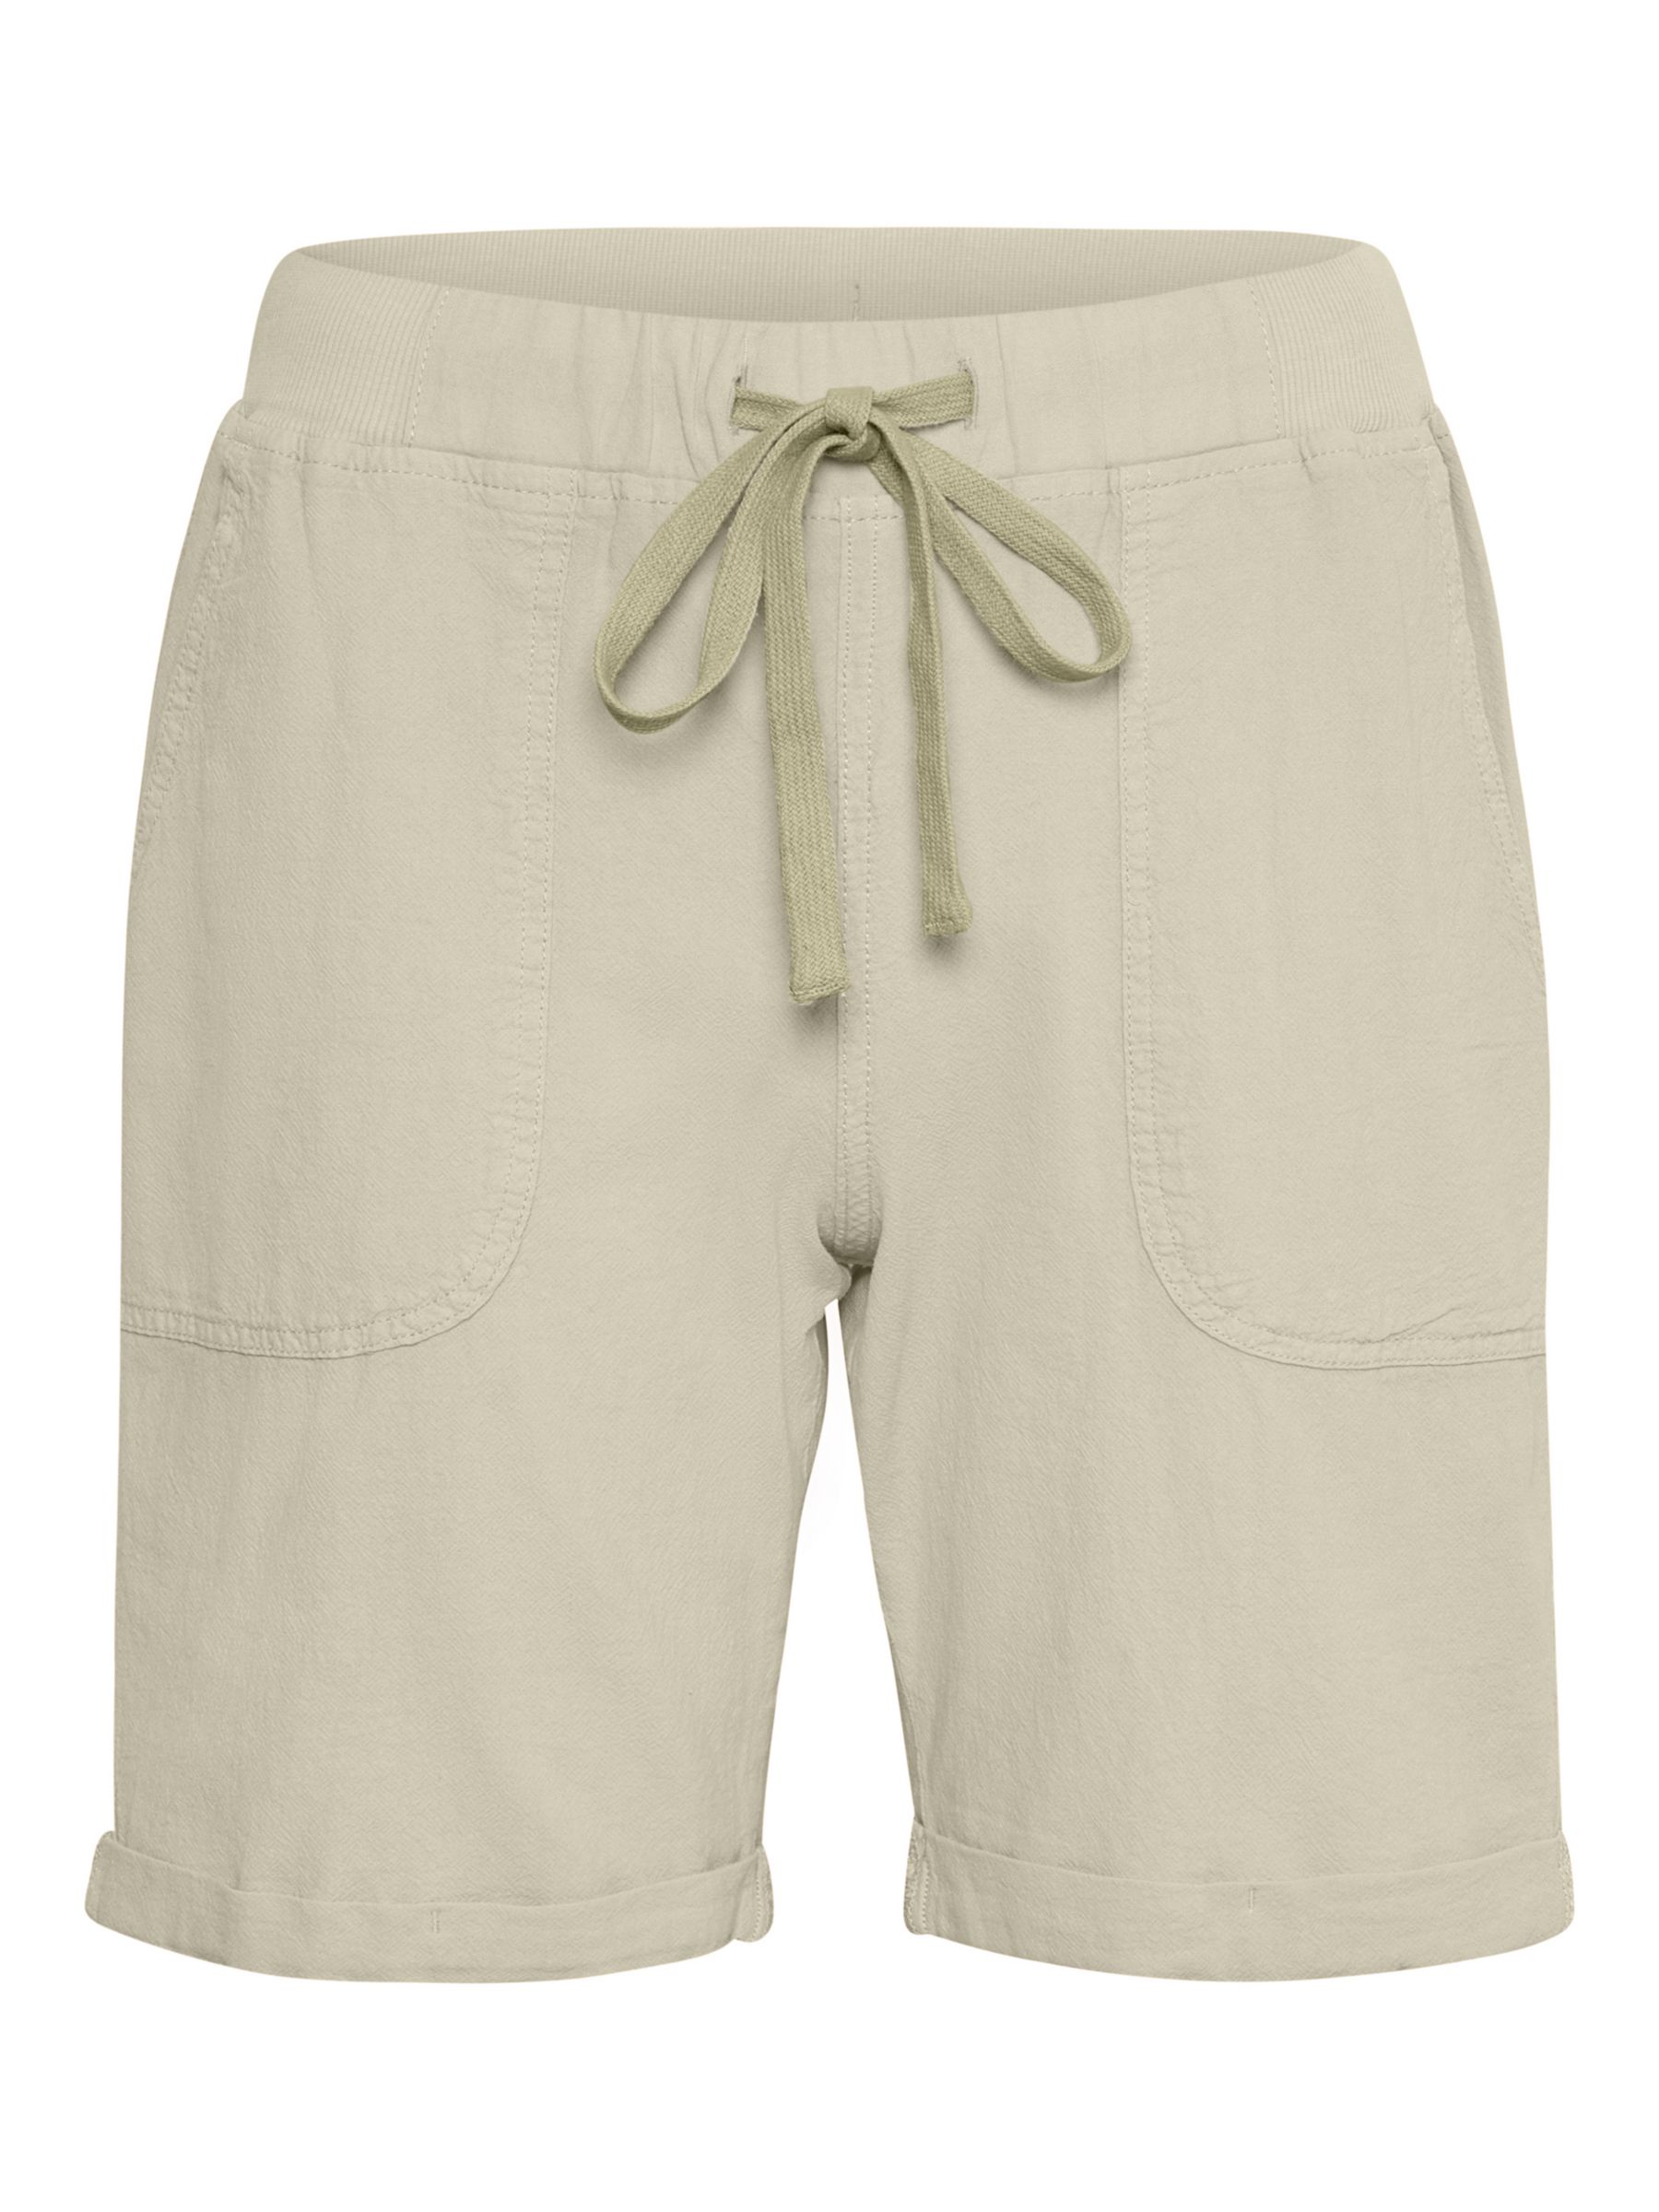 KAFFE Naya Elastic Waist Cotton Shorts, Seagrass at John Lewis & Partners